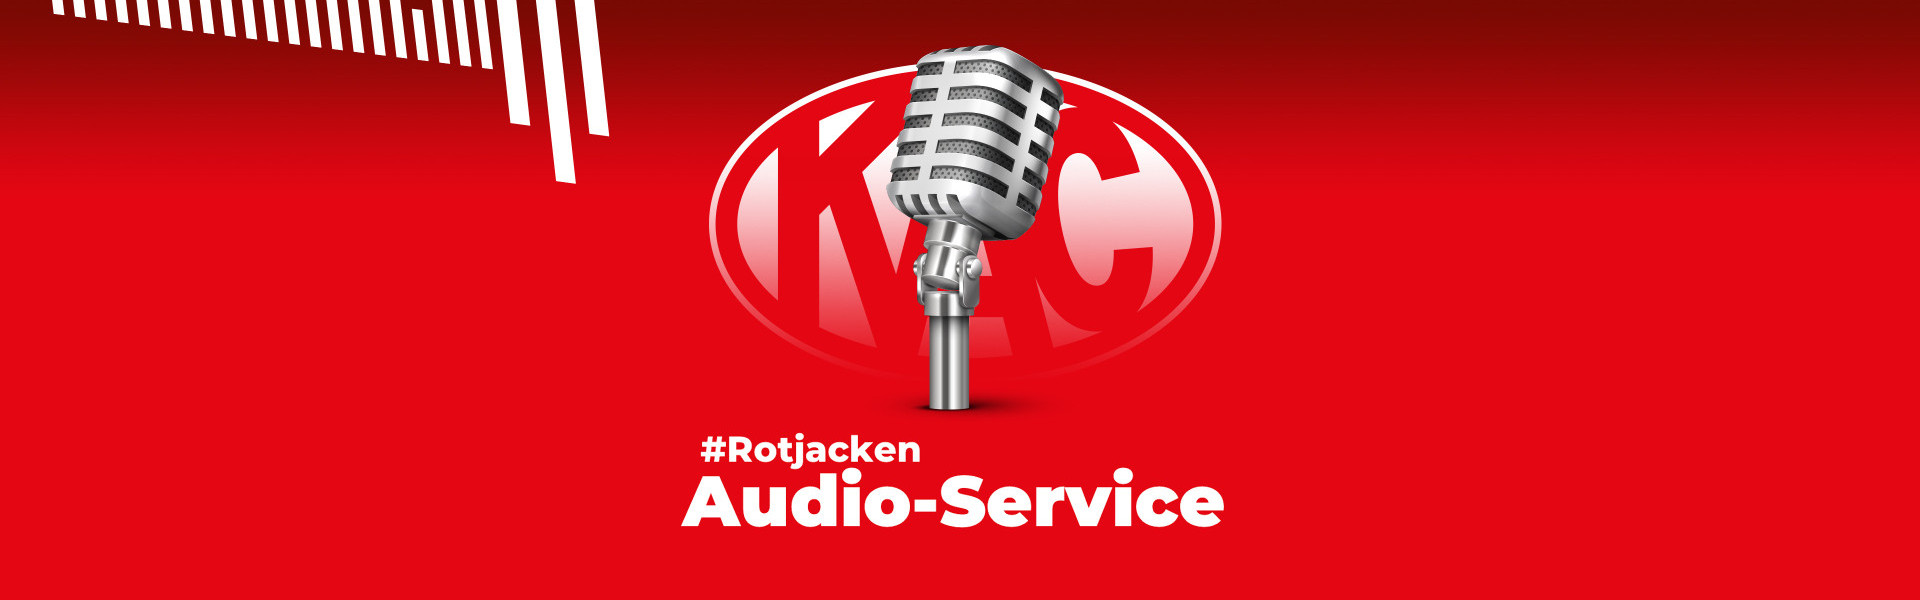 Das #Rotjacken Audio-Service